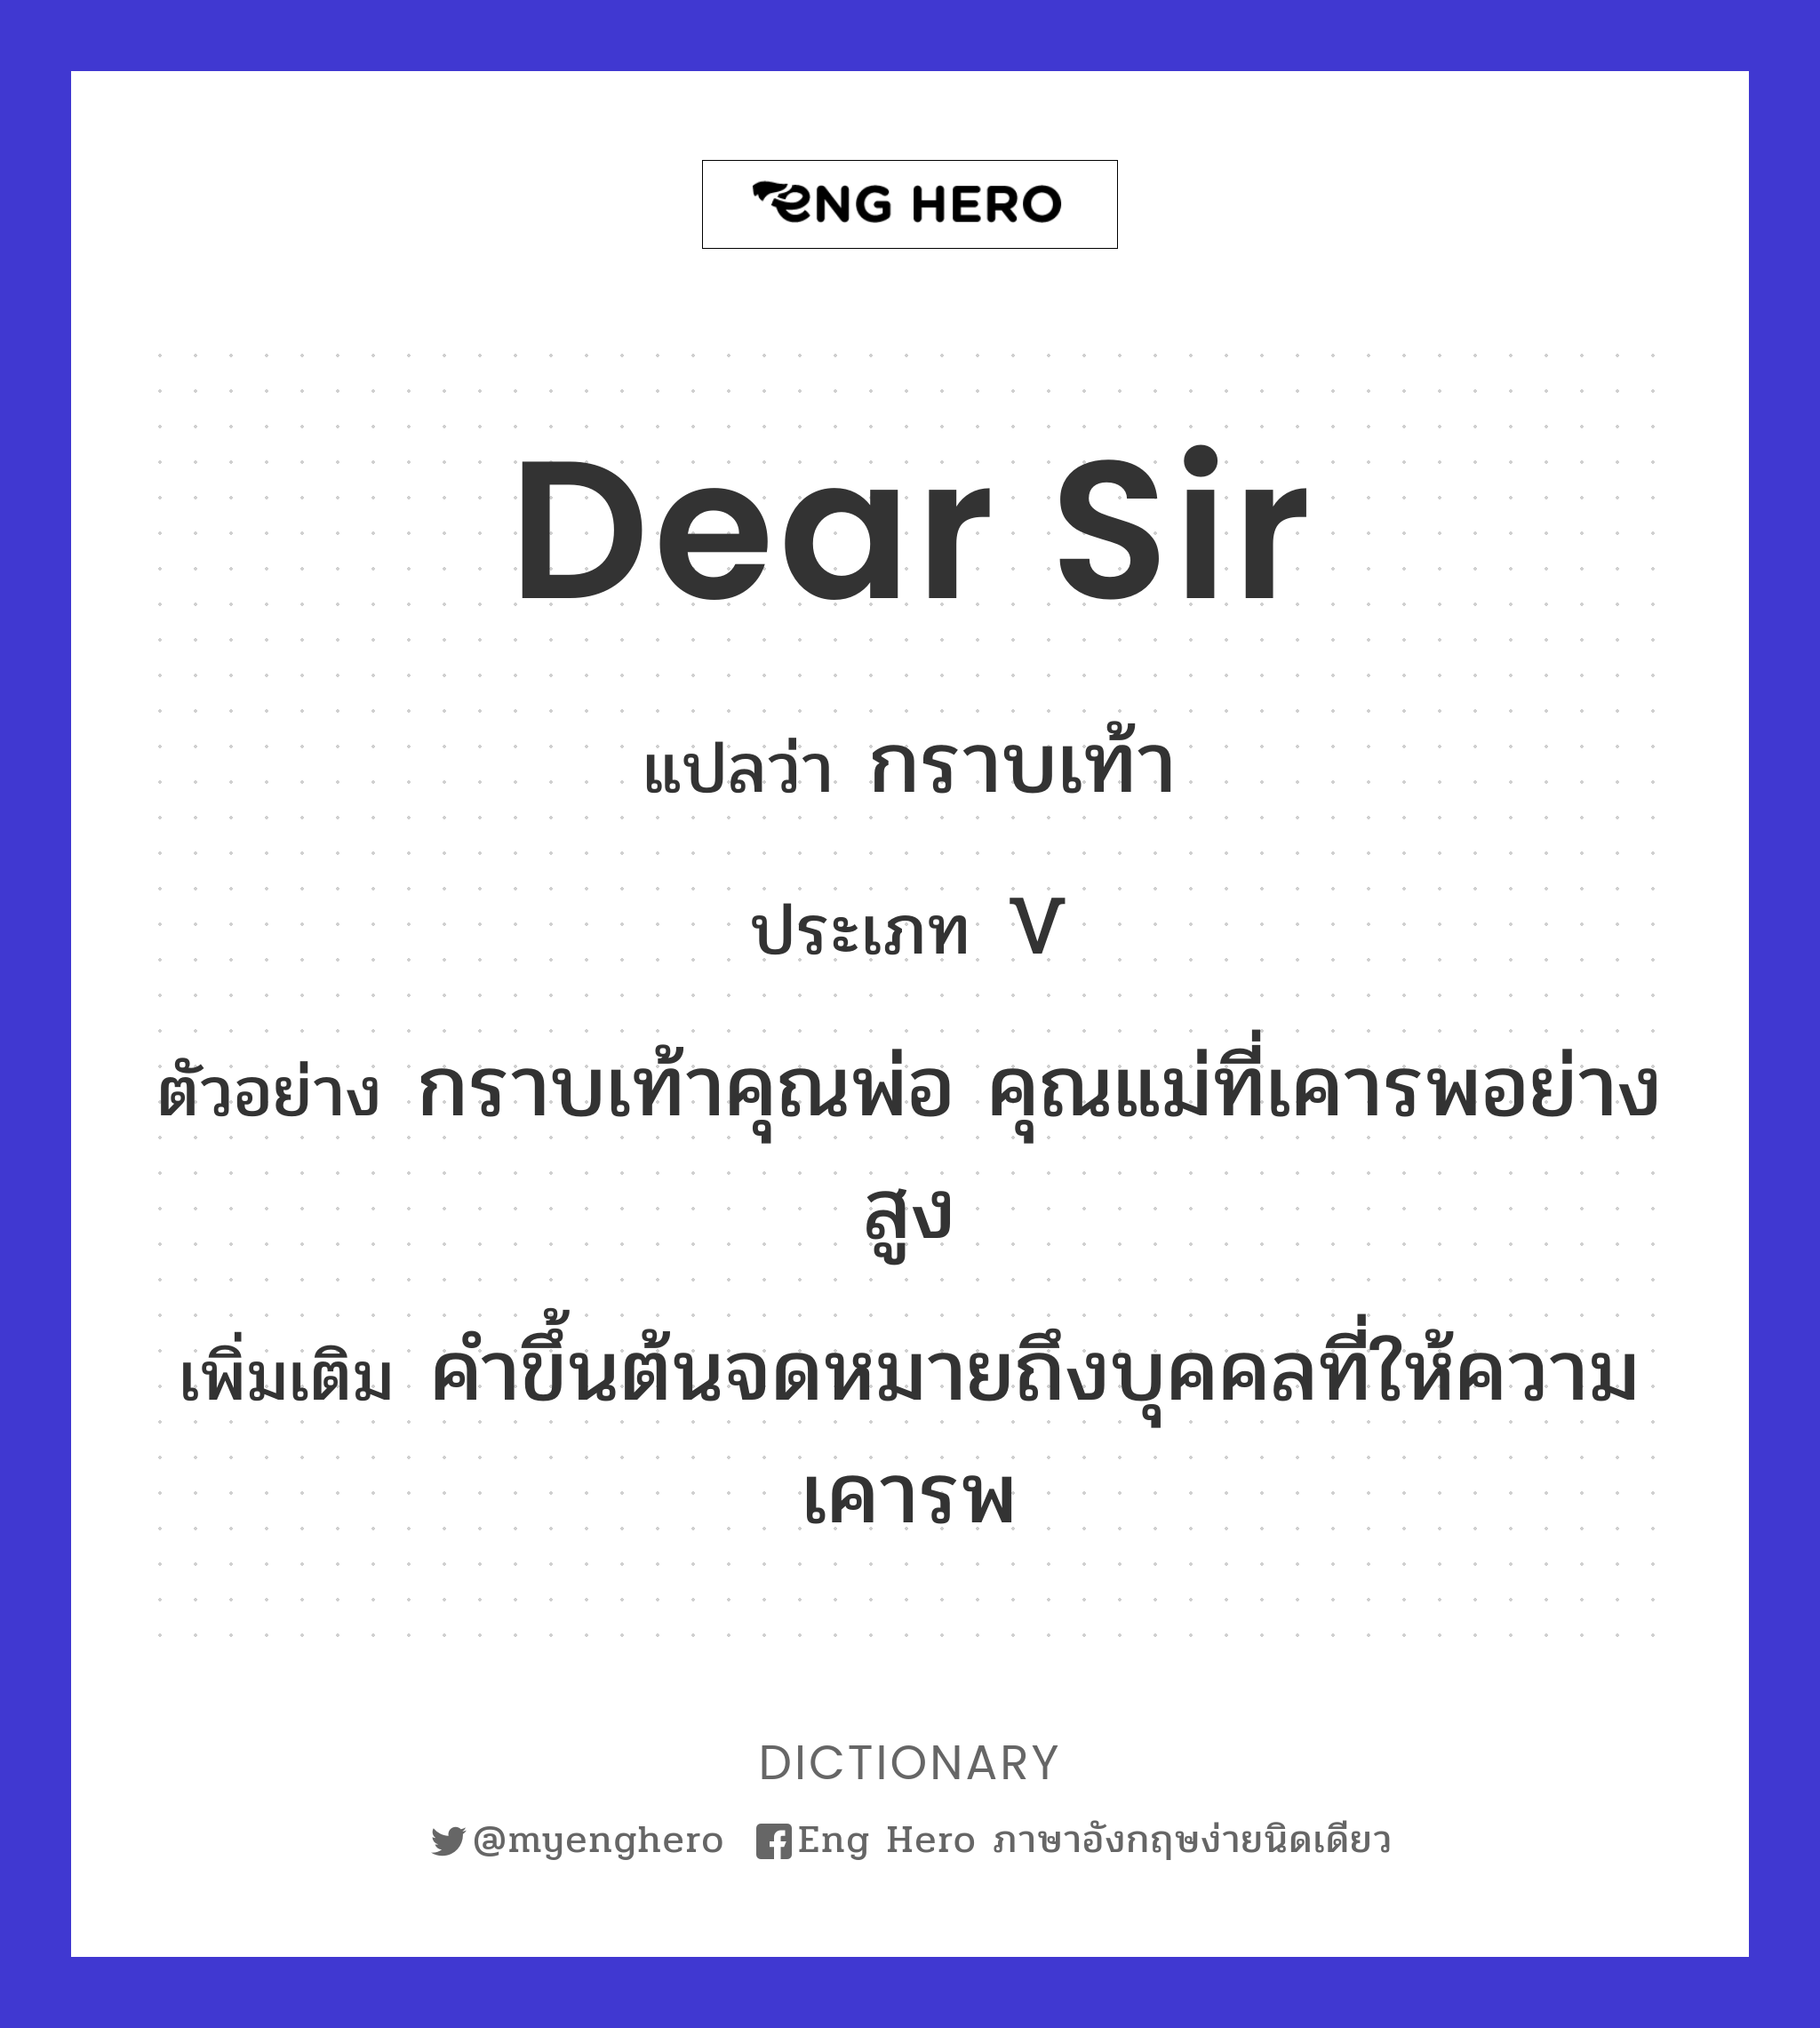 Dear Sir